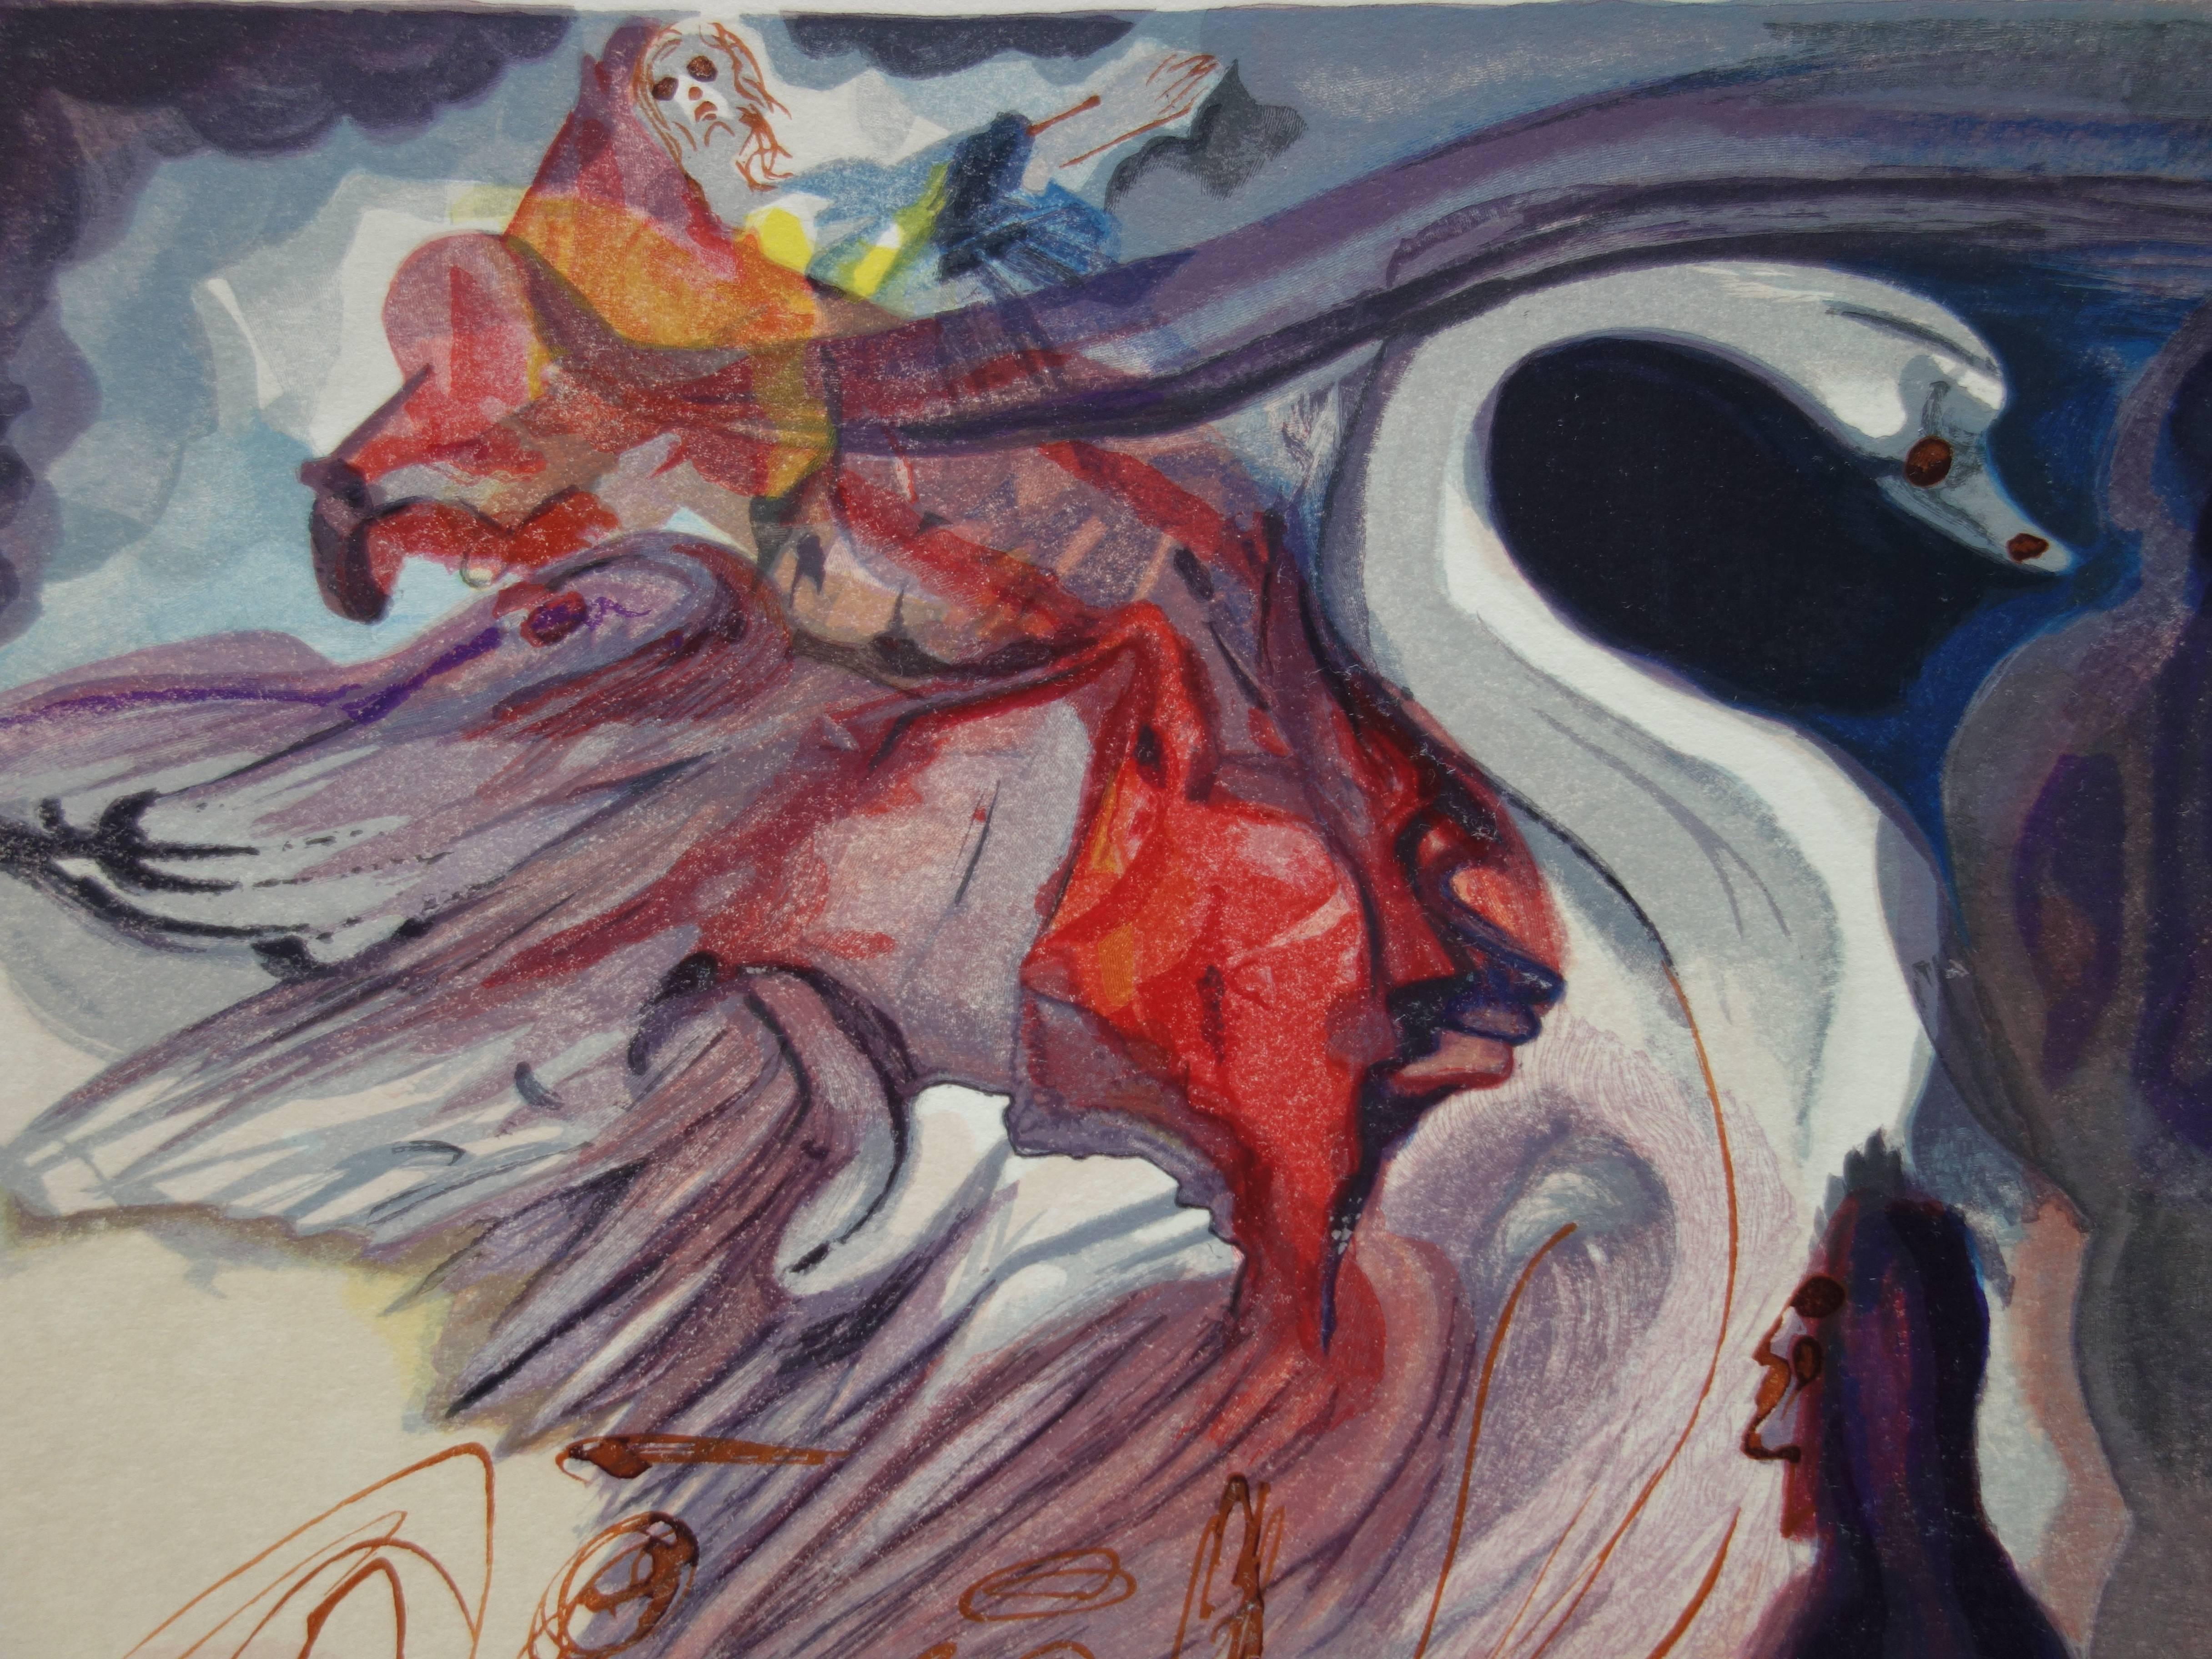 Heaven 19 - The Speech of the Bird - woodcut - 1963 - Surrealist Print by Salvador Dalí